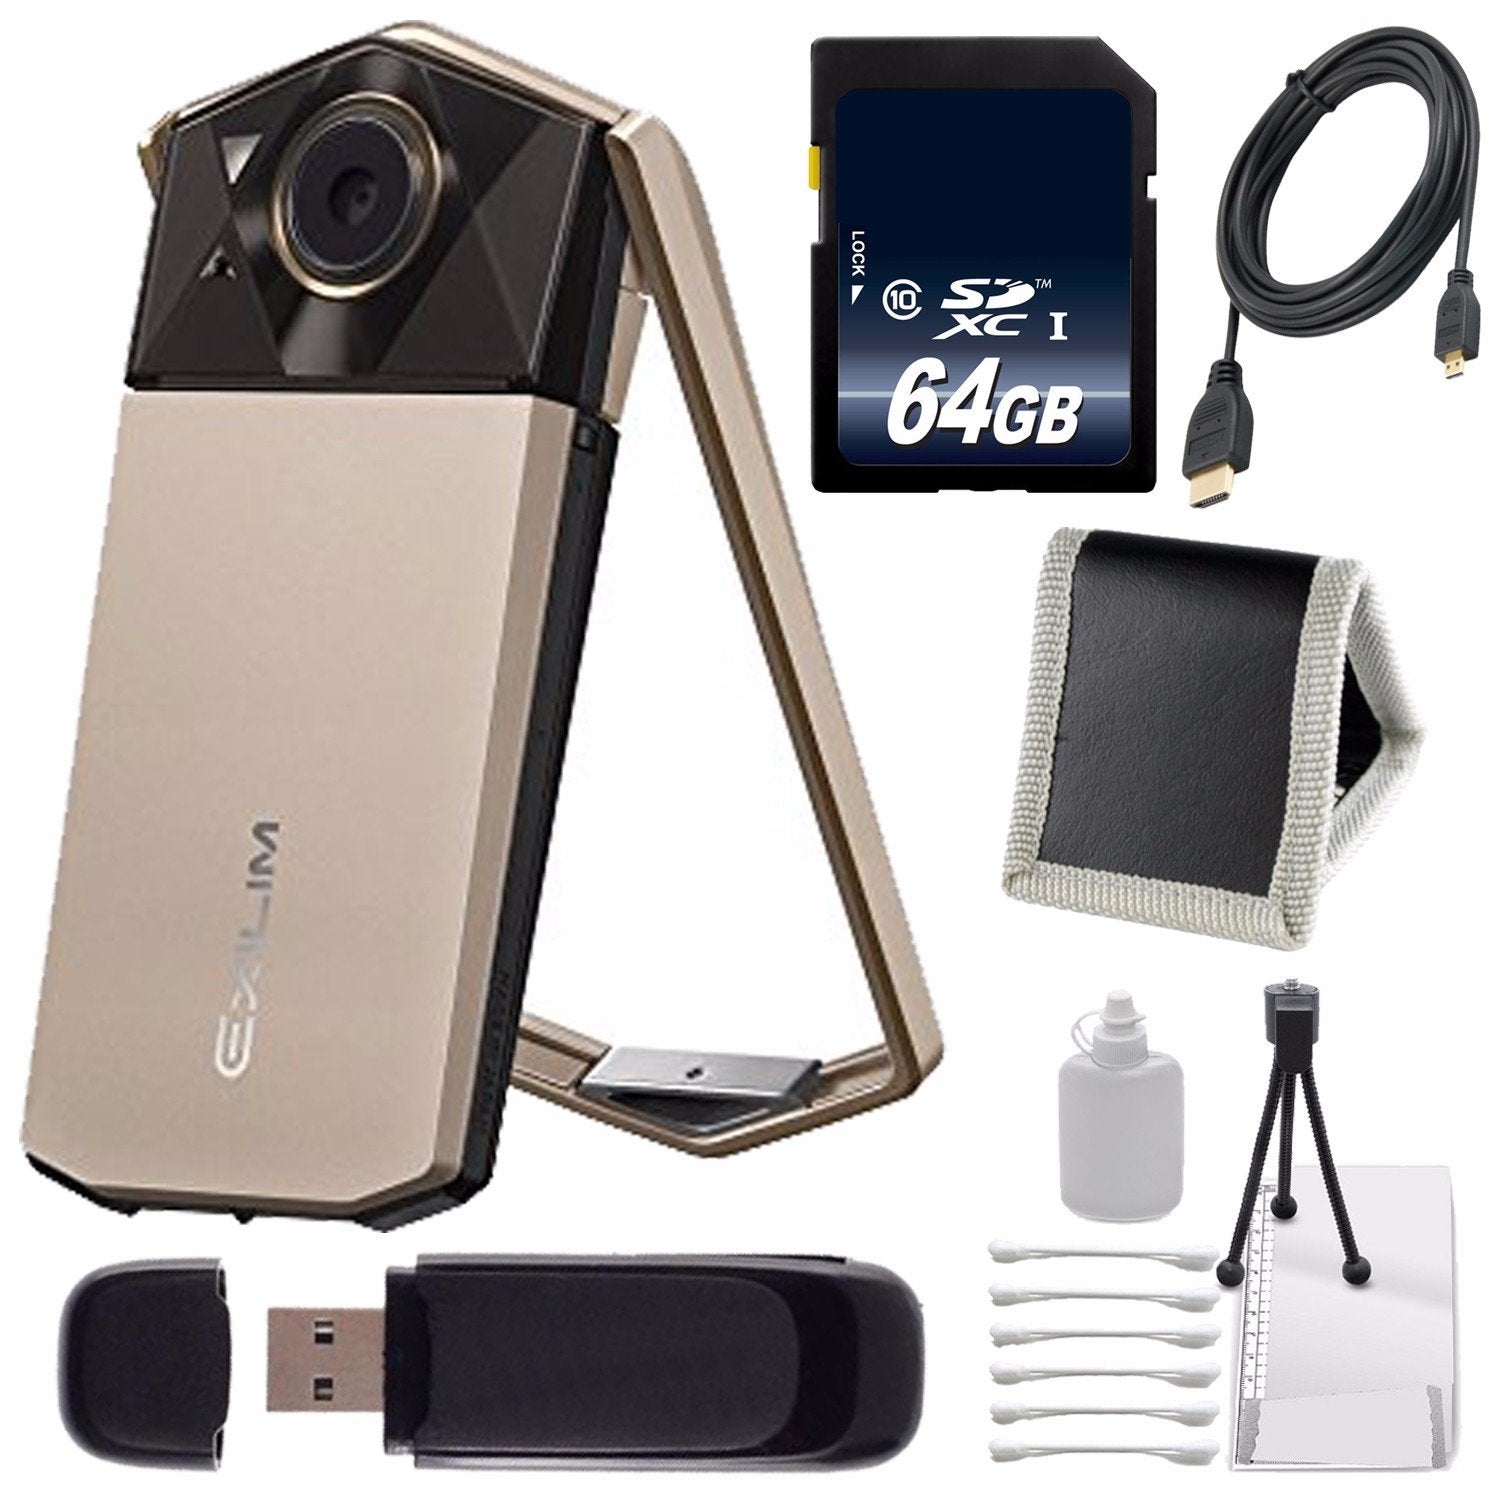 Casio Exilim EX-TR70 Selfie Digital Camera (Gold) (International Version) + 64GB Memory Card Bundle